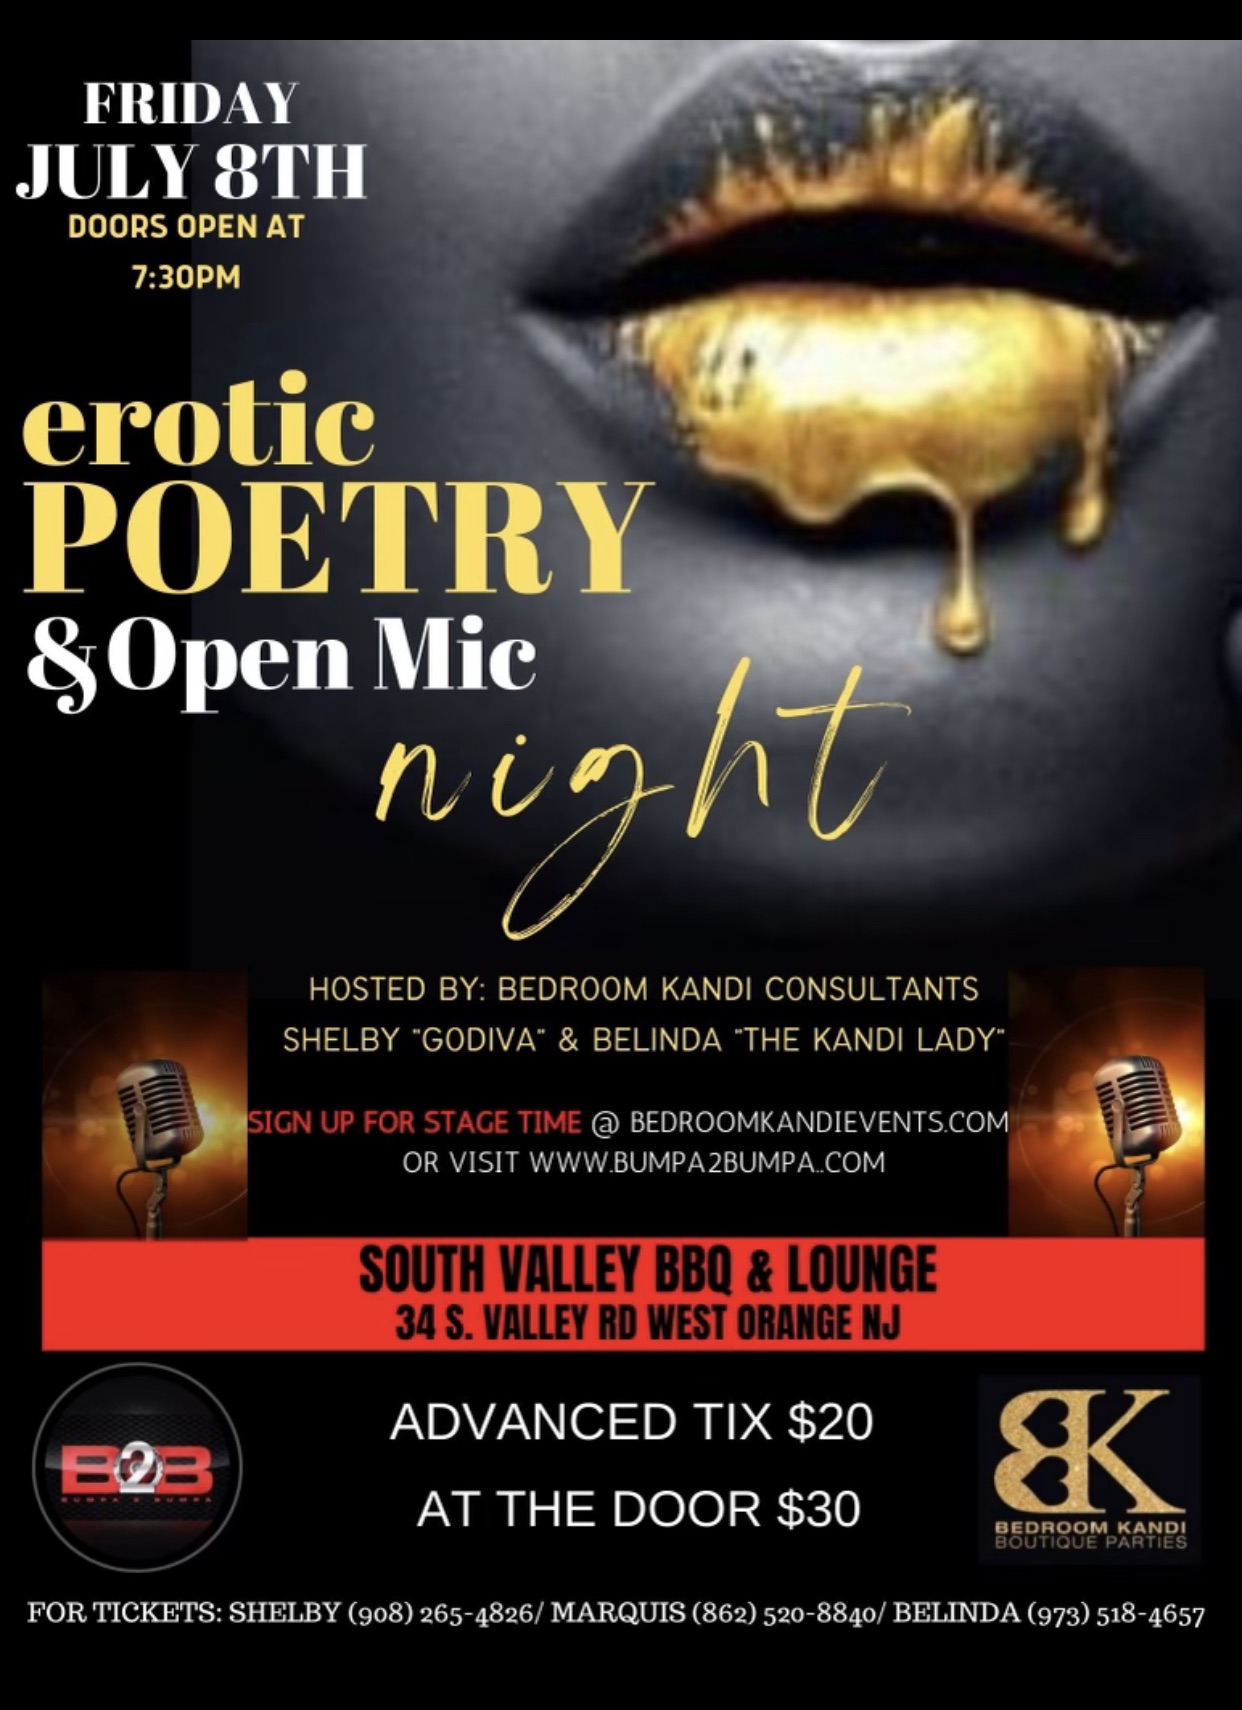 Erotic poetry & open mic night